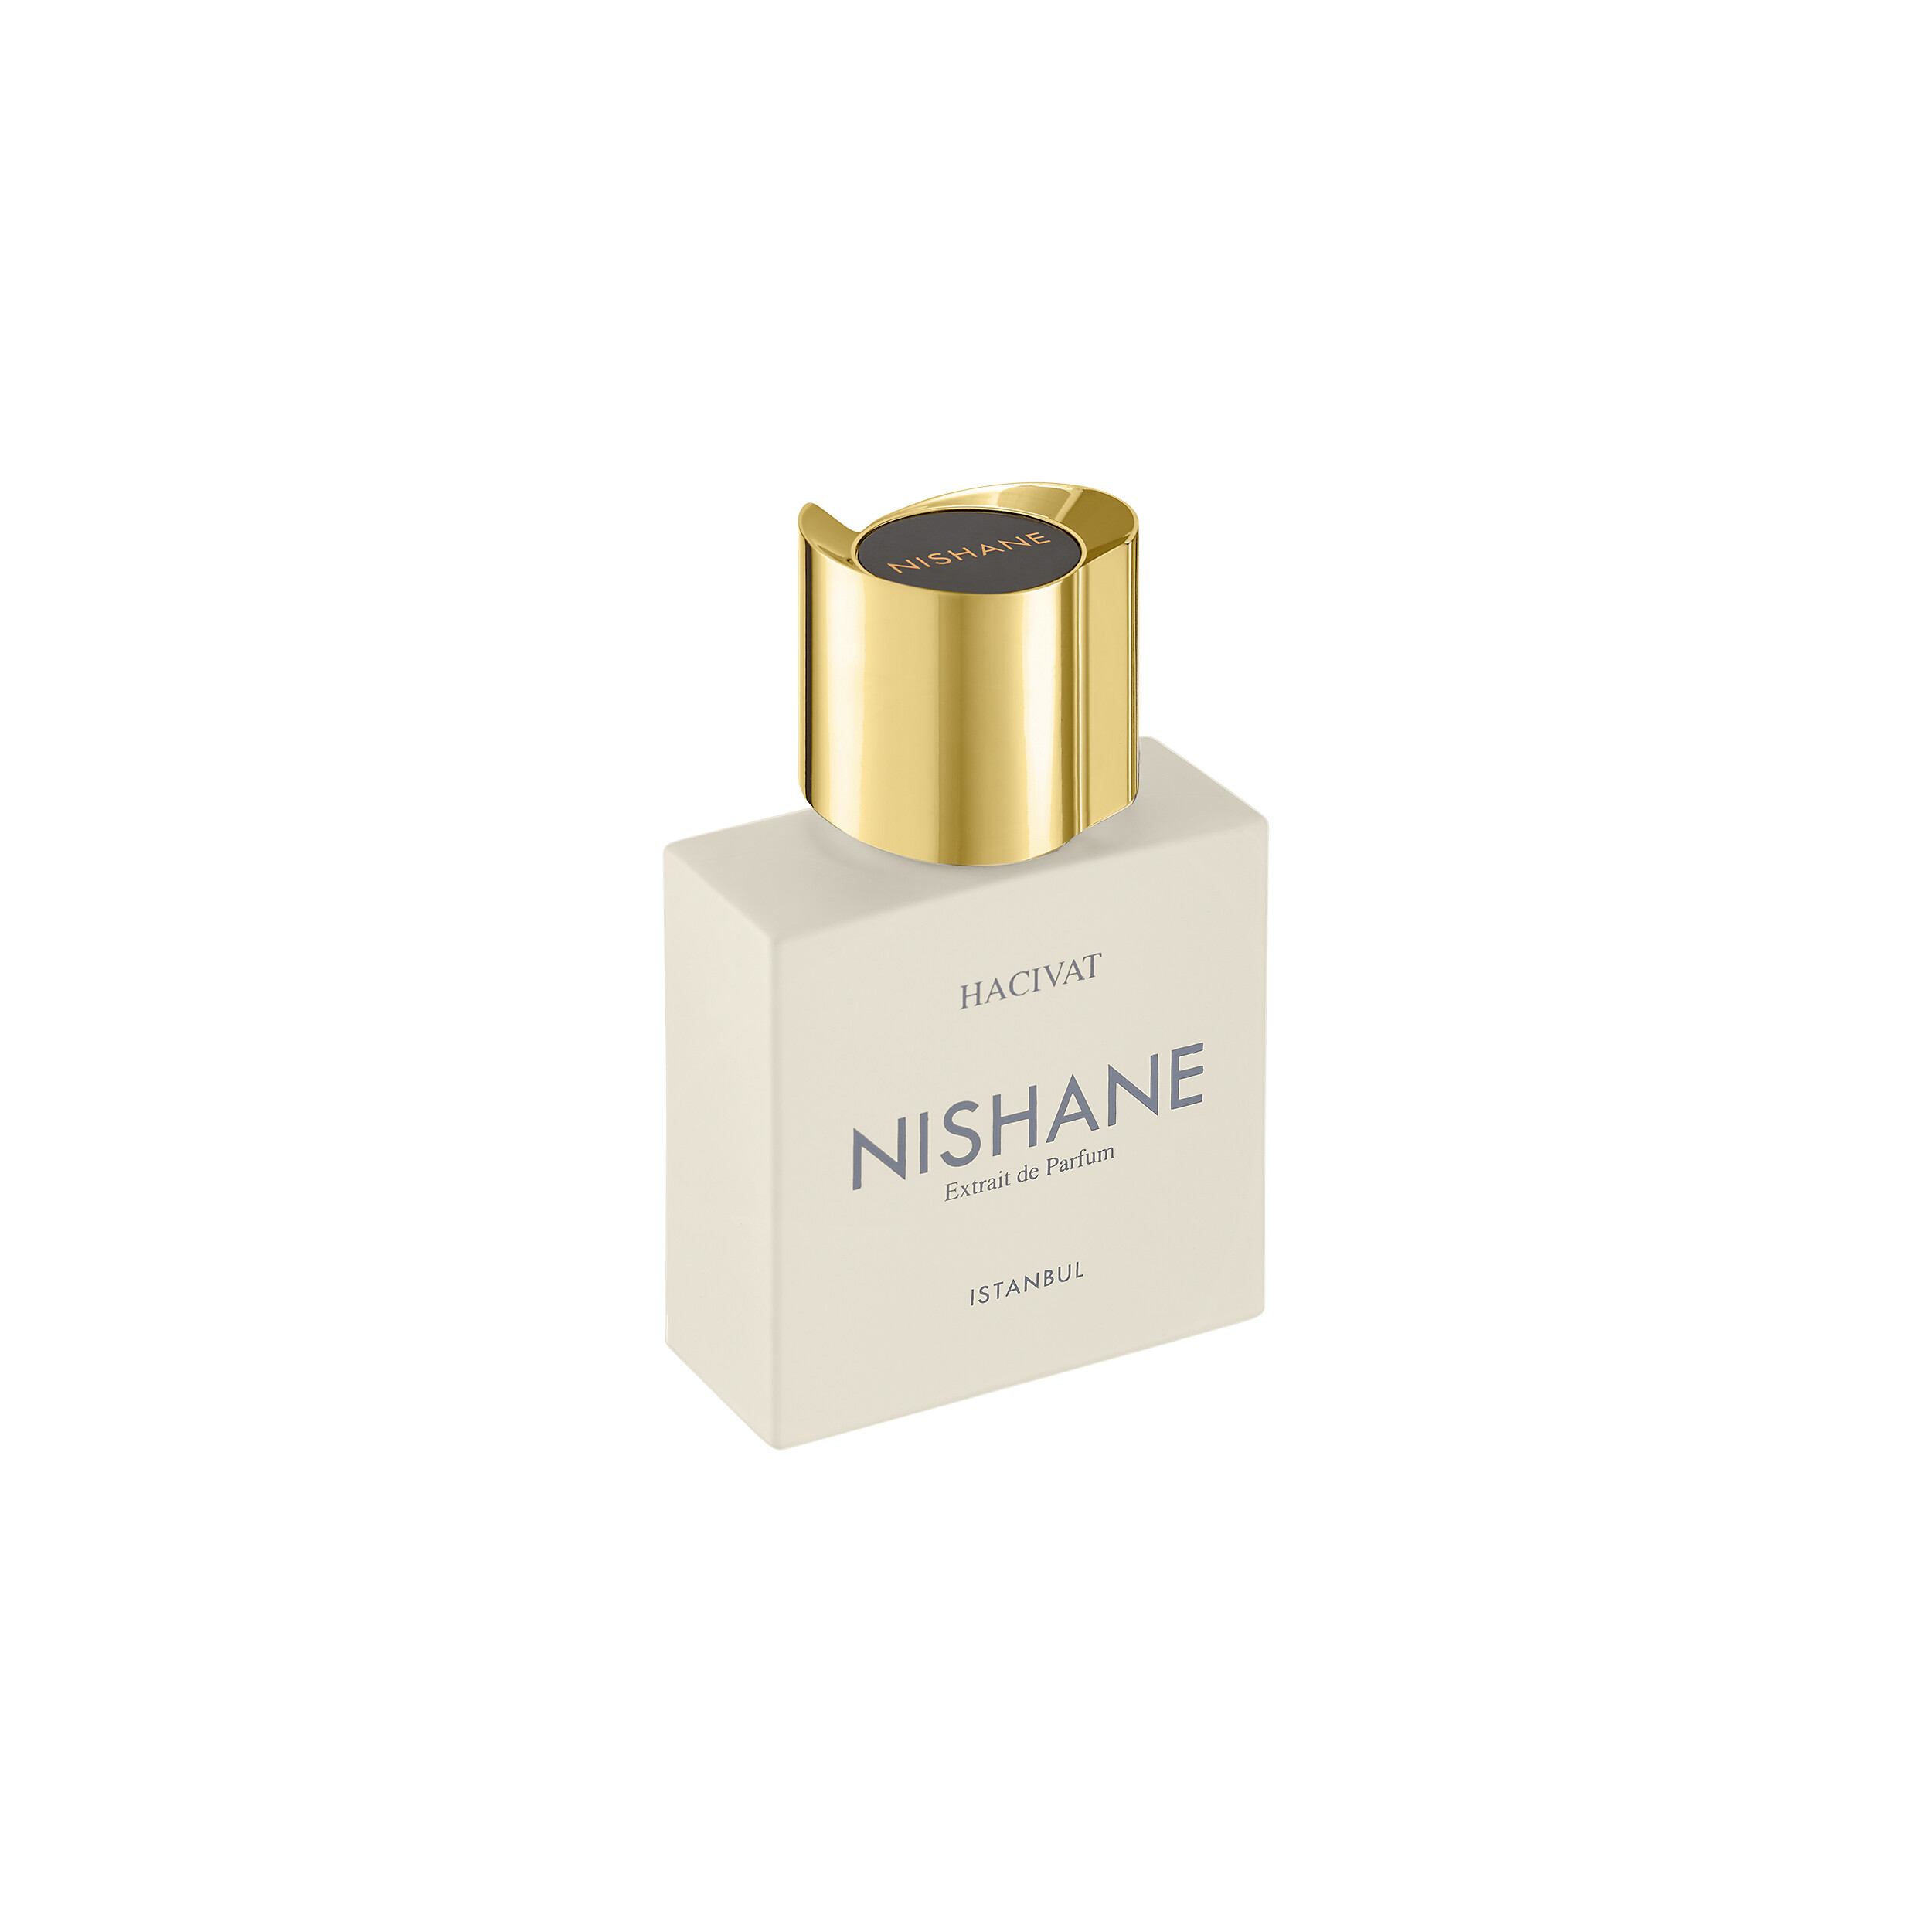 NISHANE Hacivat Extrait de Parfum 50ml